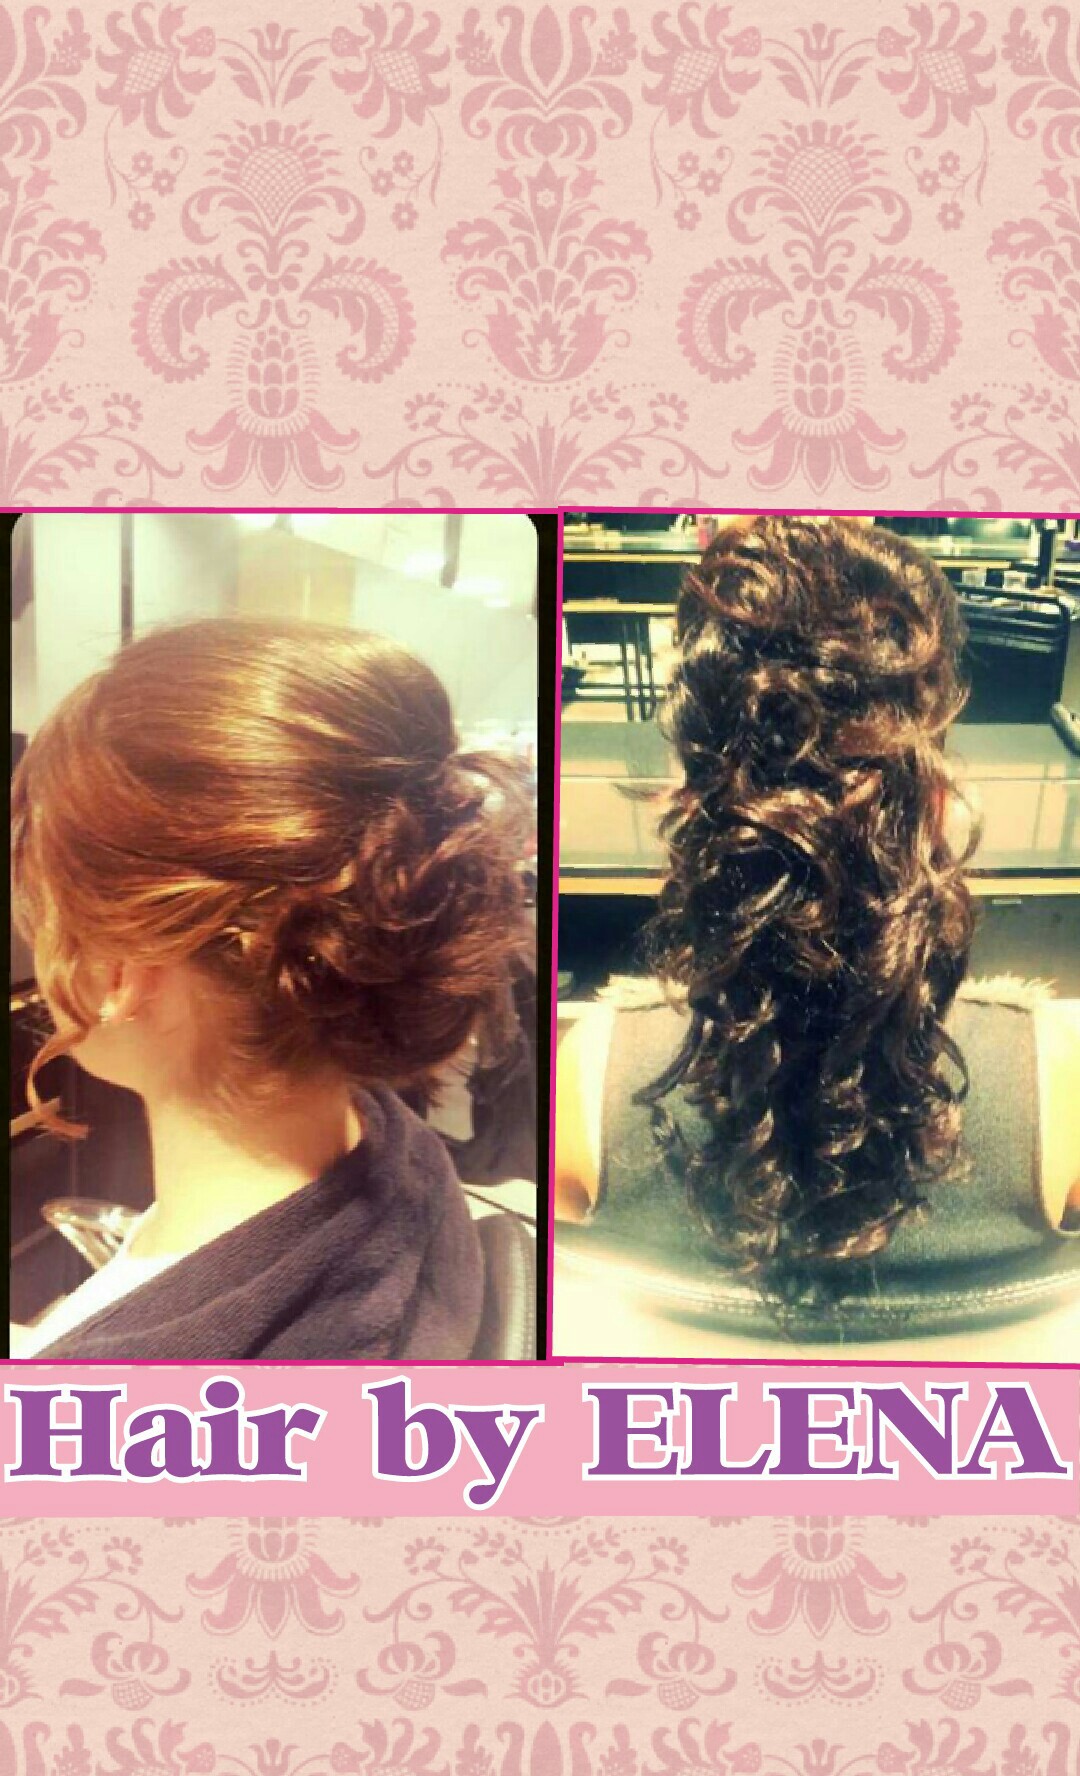 Hair by ELENA